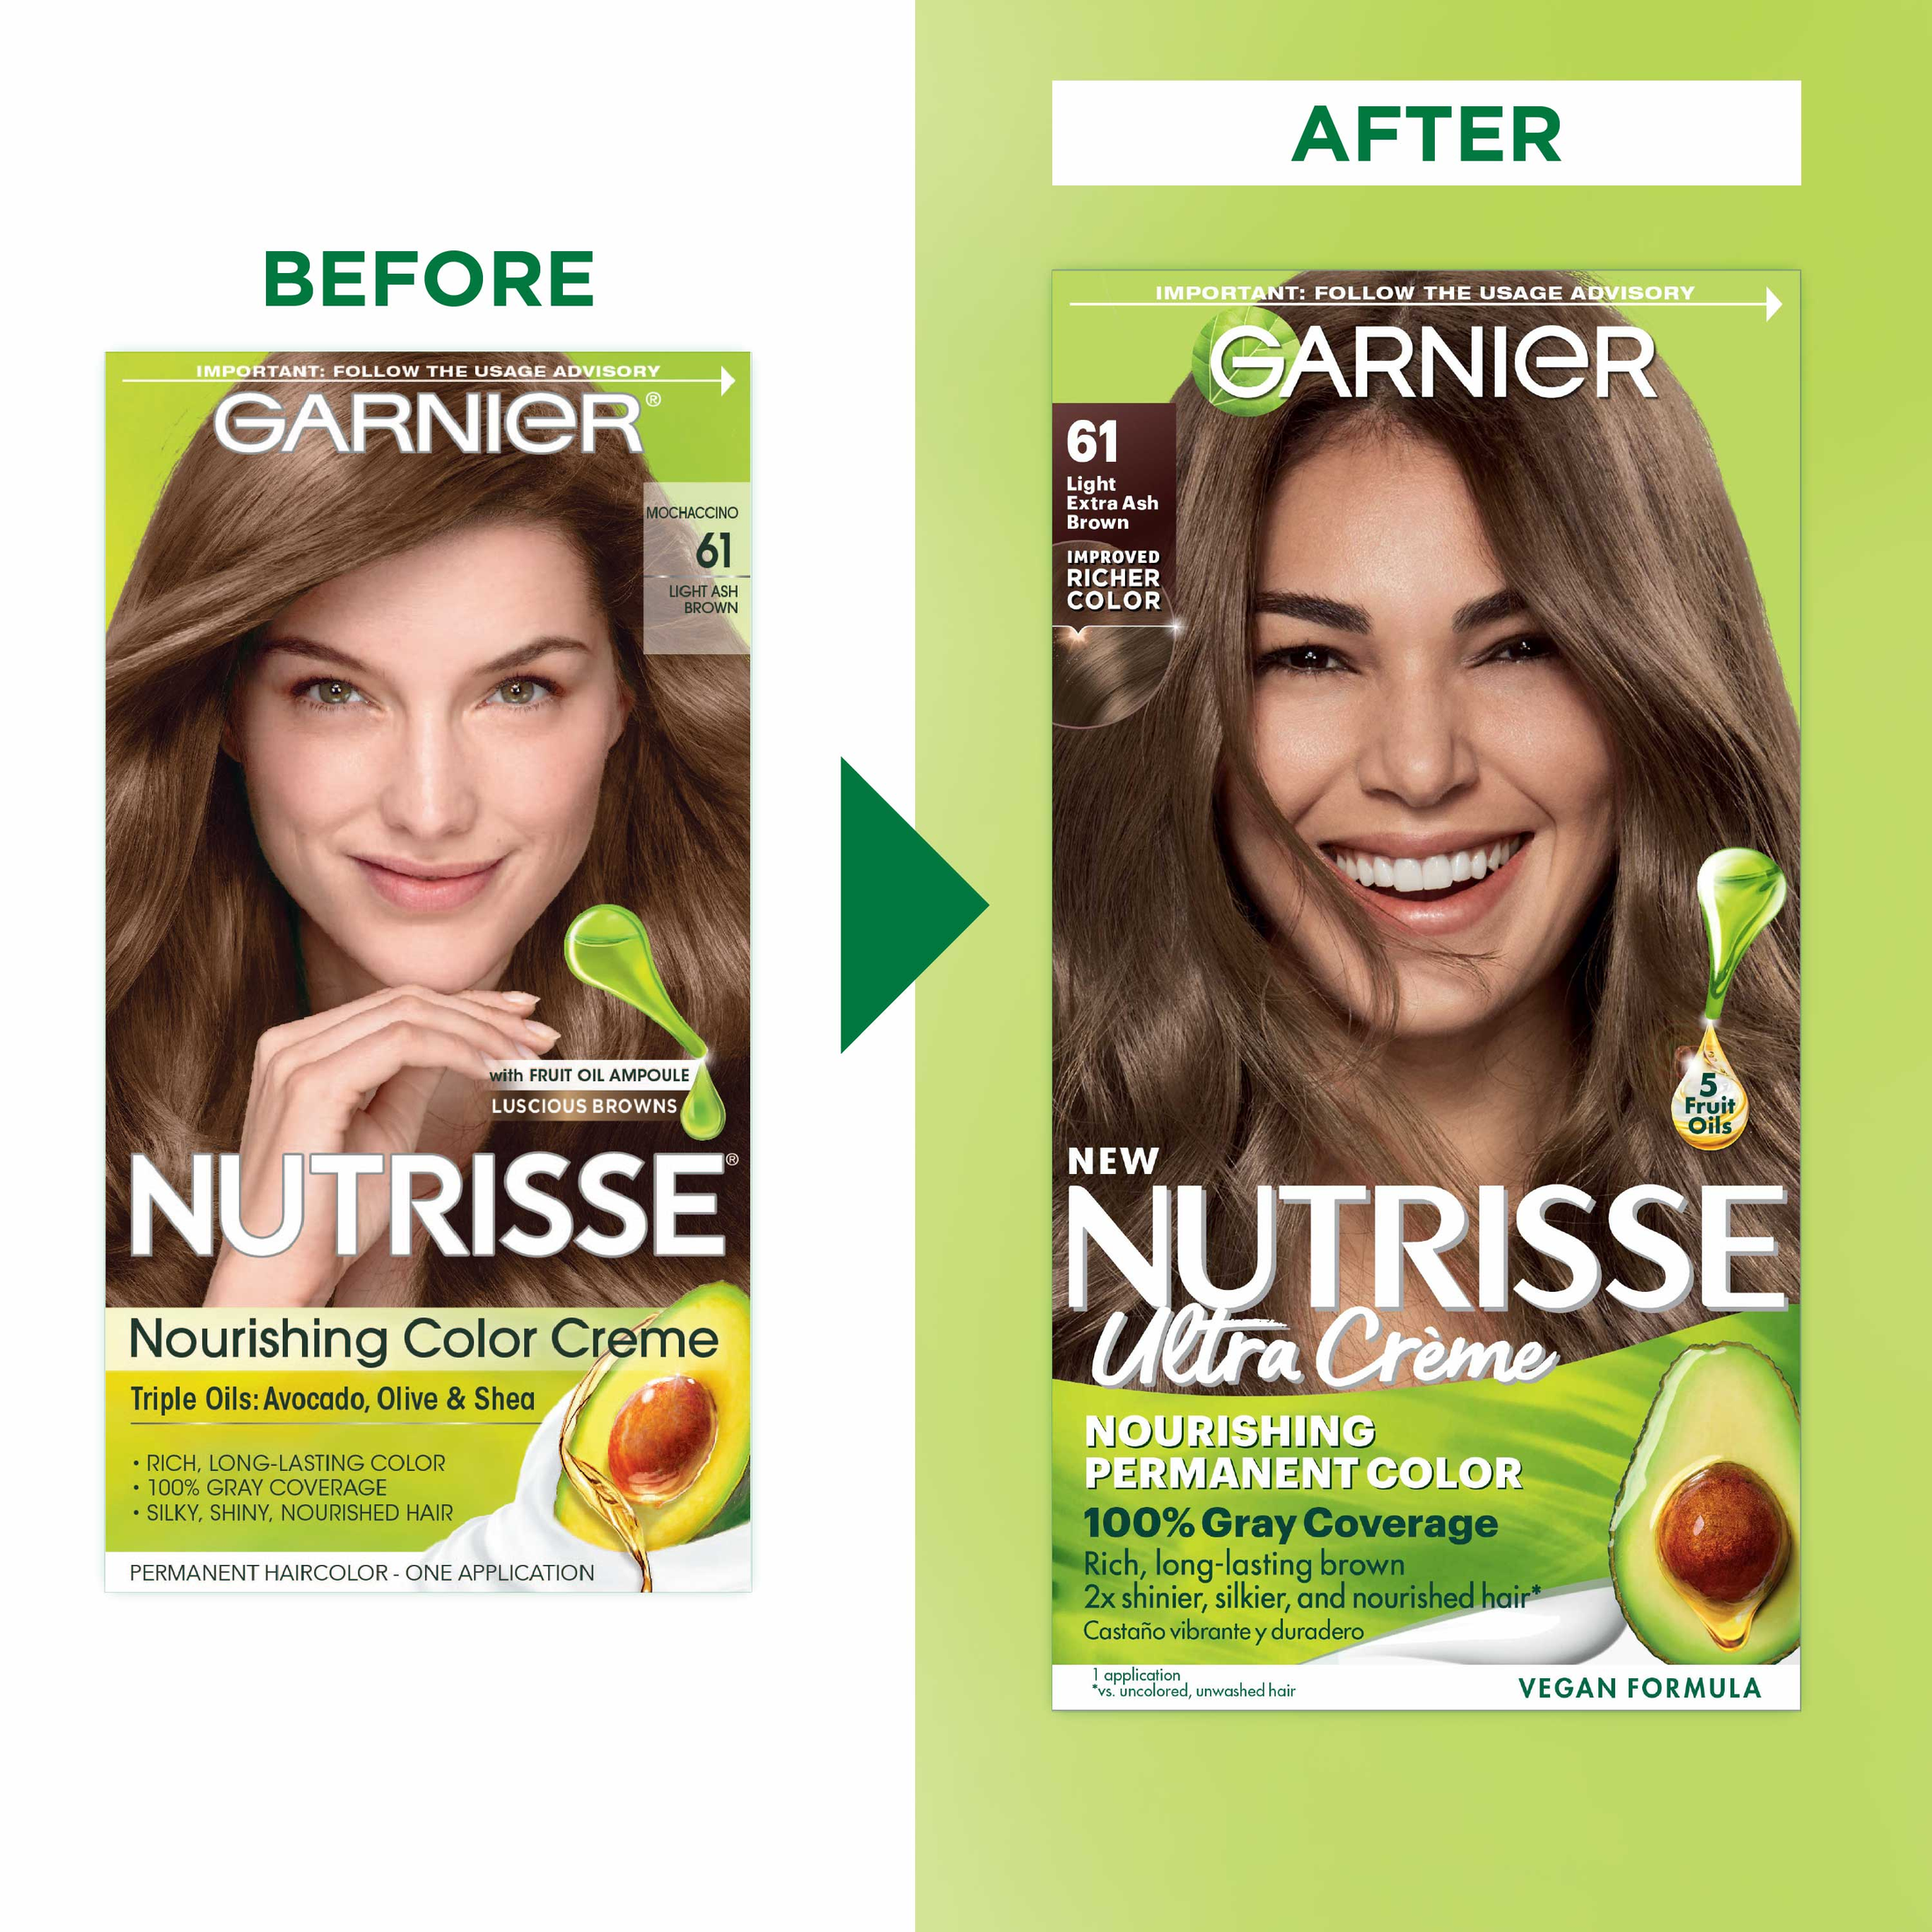 Garnier Nutrisse Nourishing Hair Color Creme, 061 Light Ash Brown Mochaccino - image 3 of 11